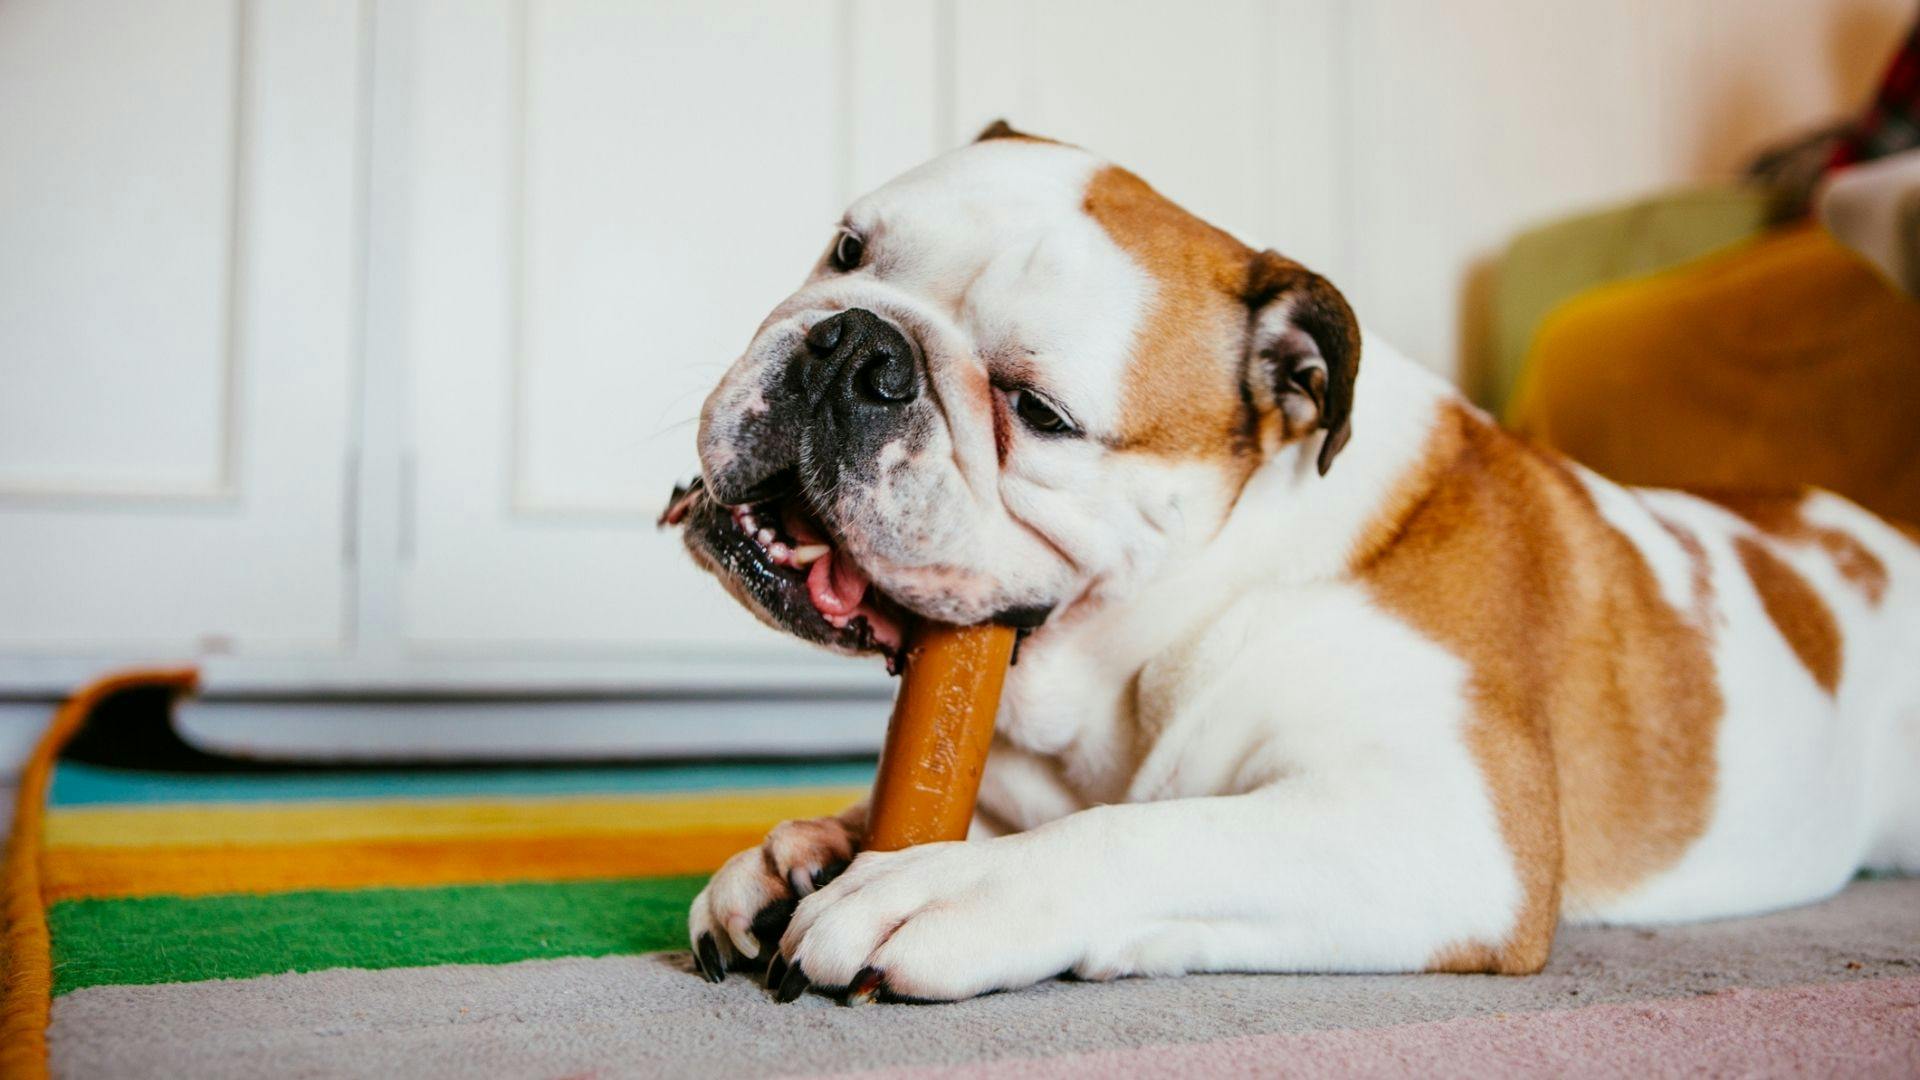 XGao Silicone Dog Toothbrush Chew Toy Bone-Shape Cleaner Teeth Oral Care Food-Grade Pet Puppy Dental Teething Care Healthy Teeth Gums Play Training Fetch Fun Toys 